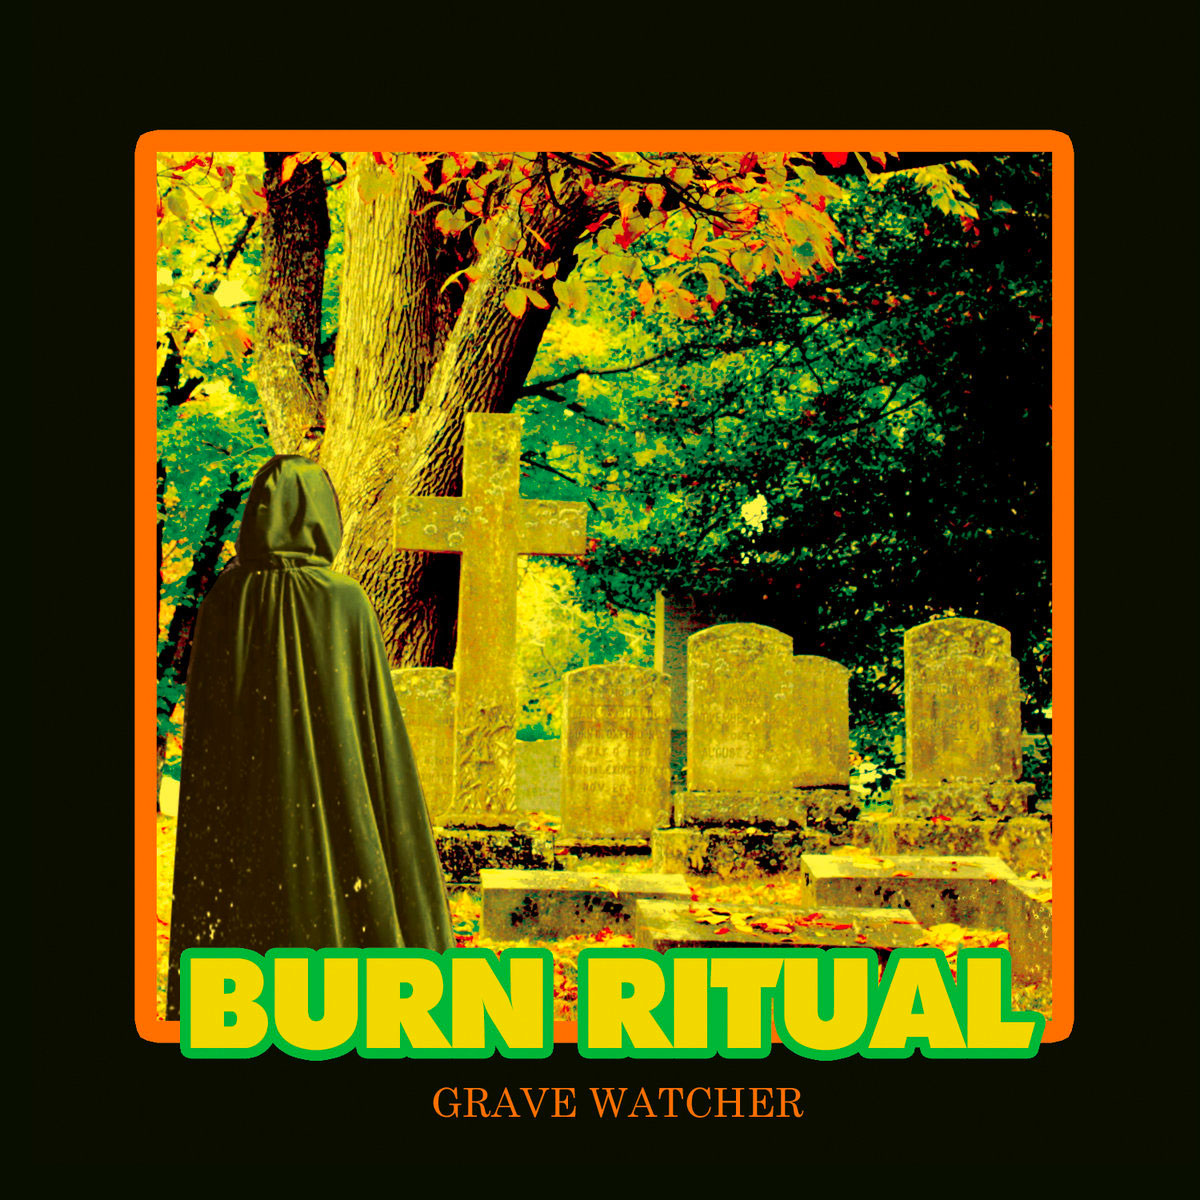 Grave Watcher by Burn Ritual